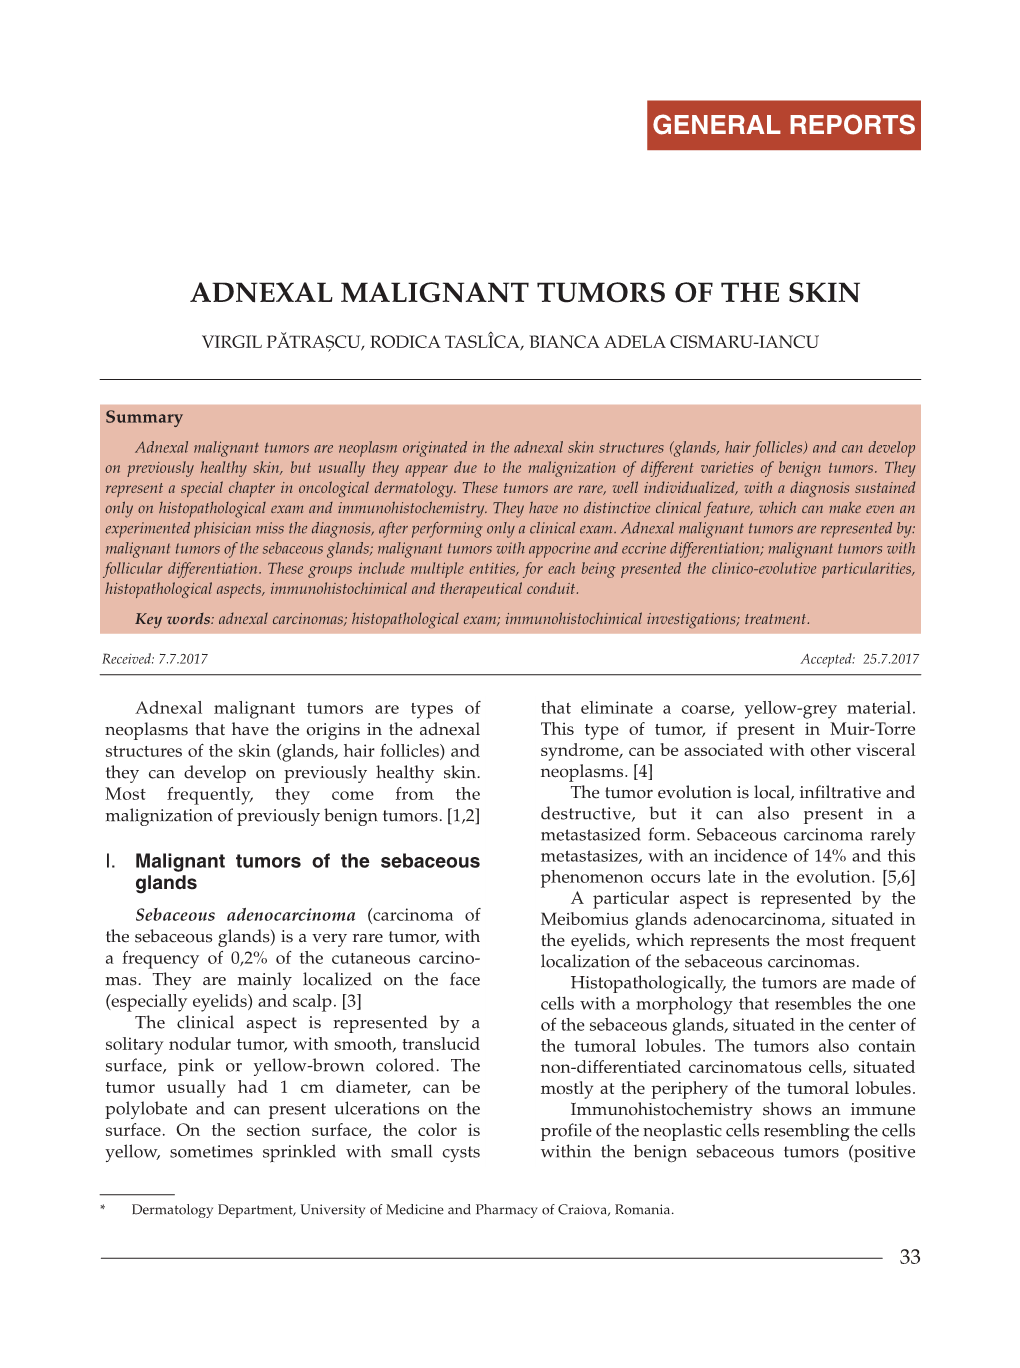 Adnexal Malignant Tumors of the Skin